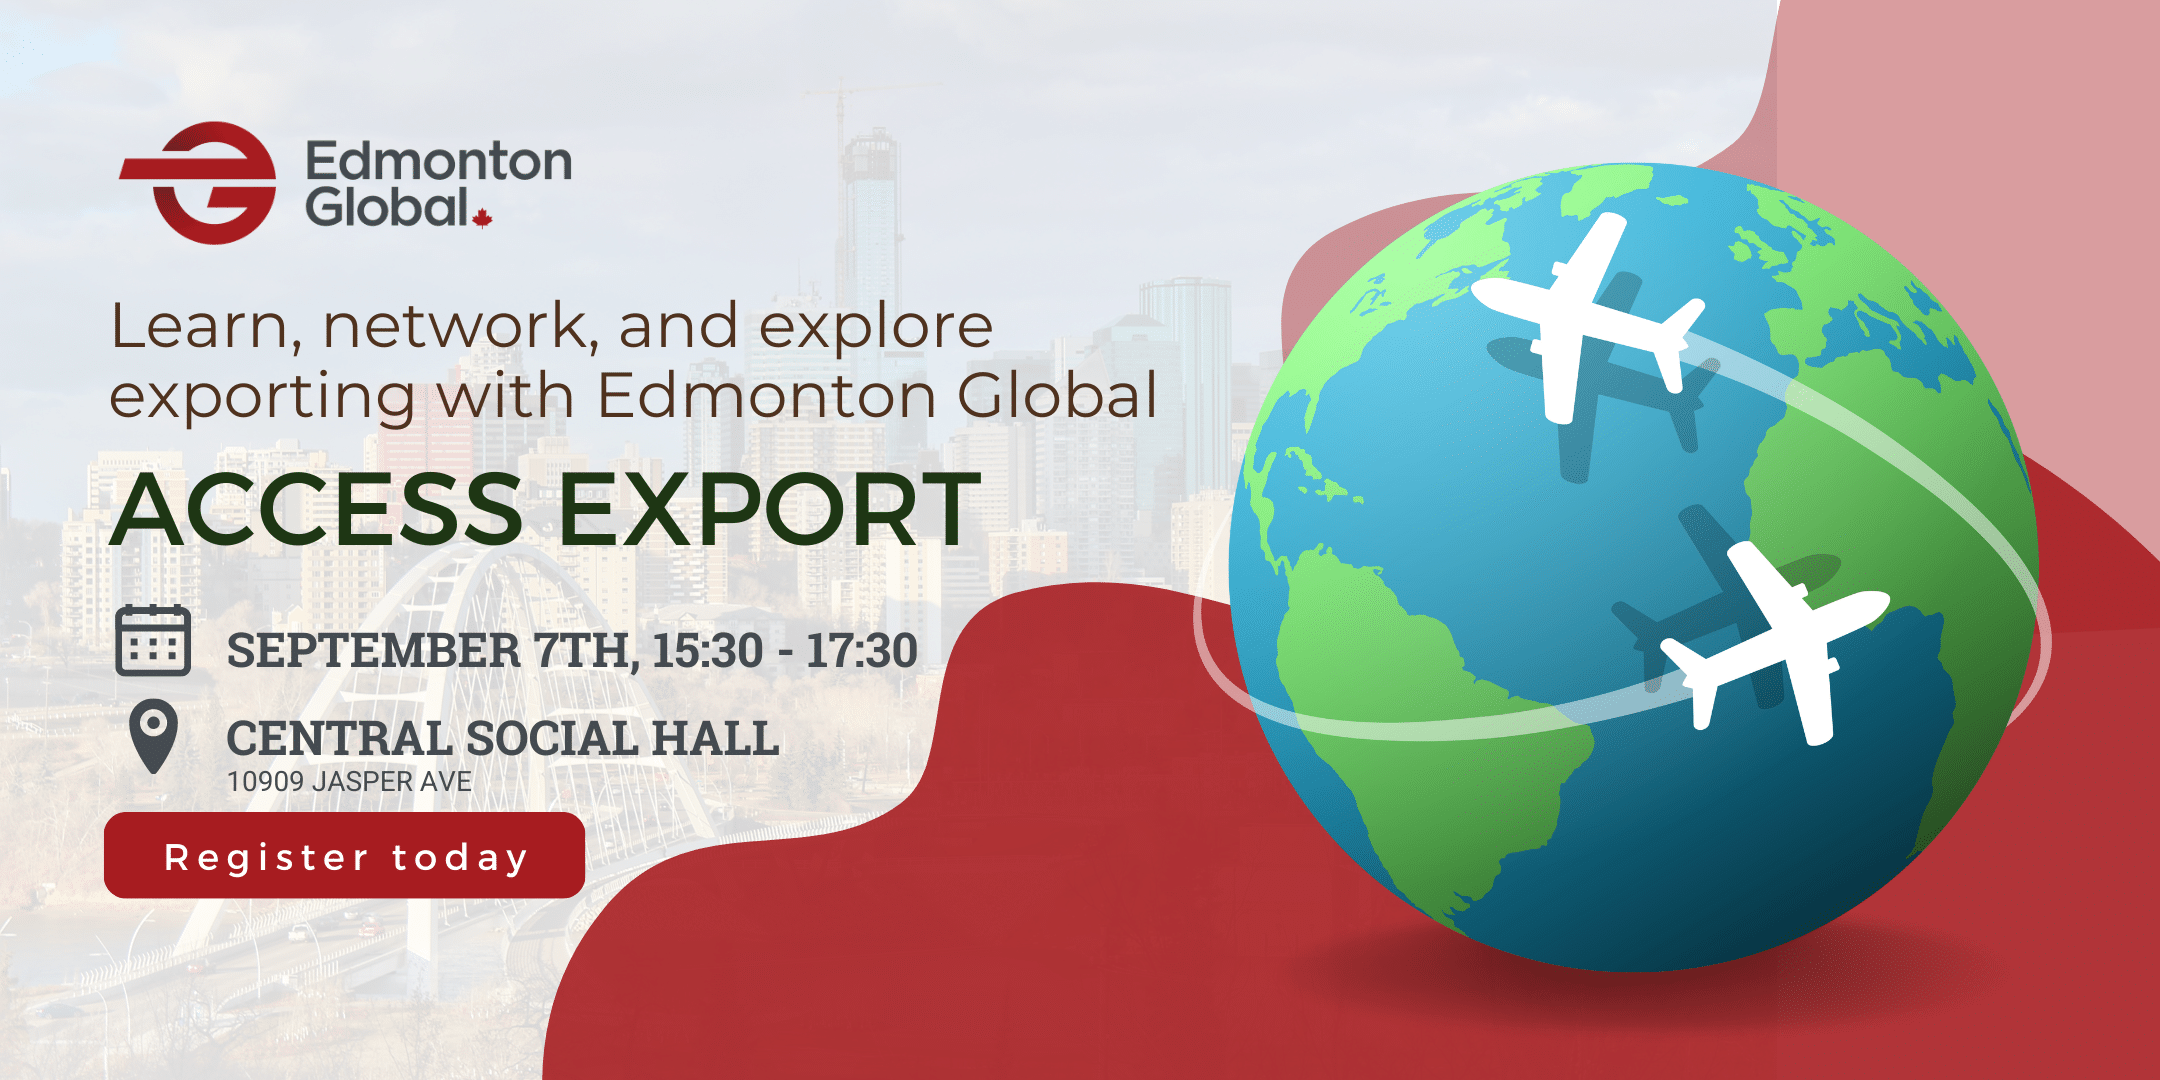 Edmonton global network and explore with edmonton global access export.